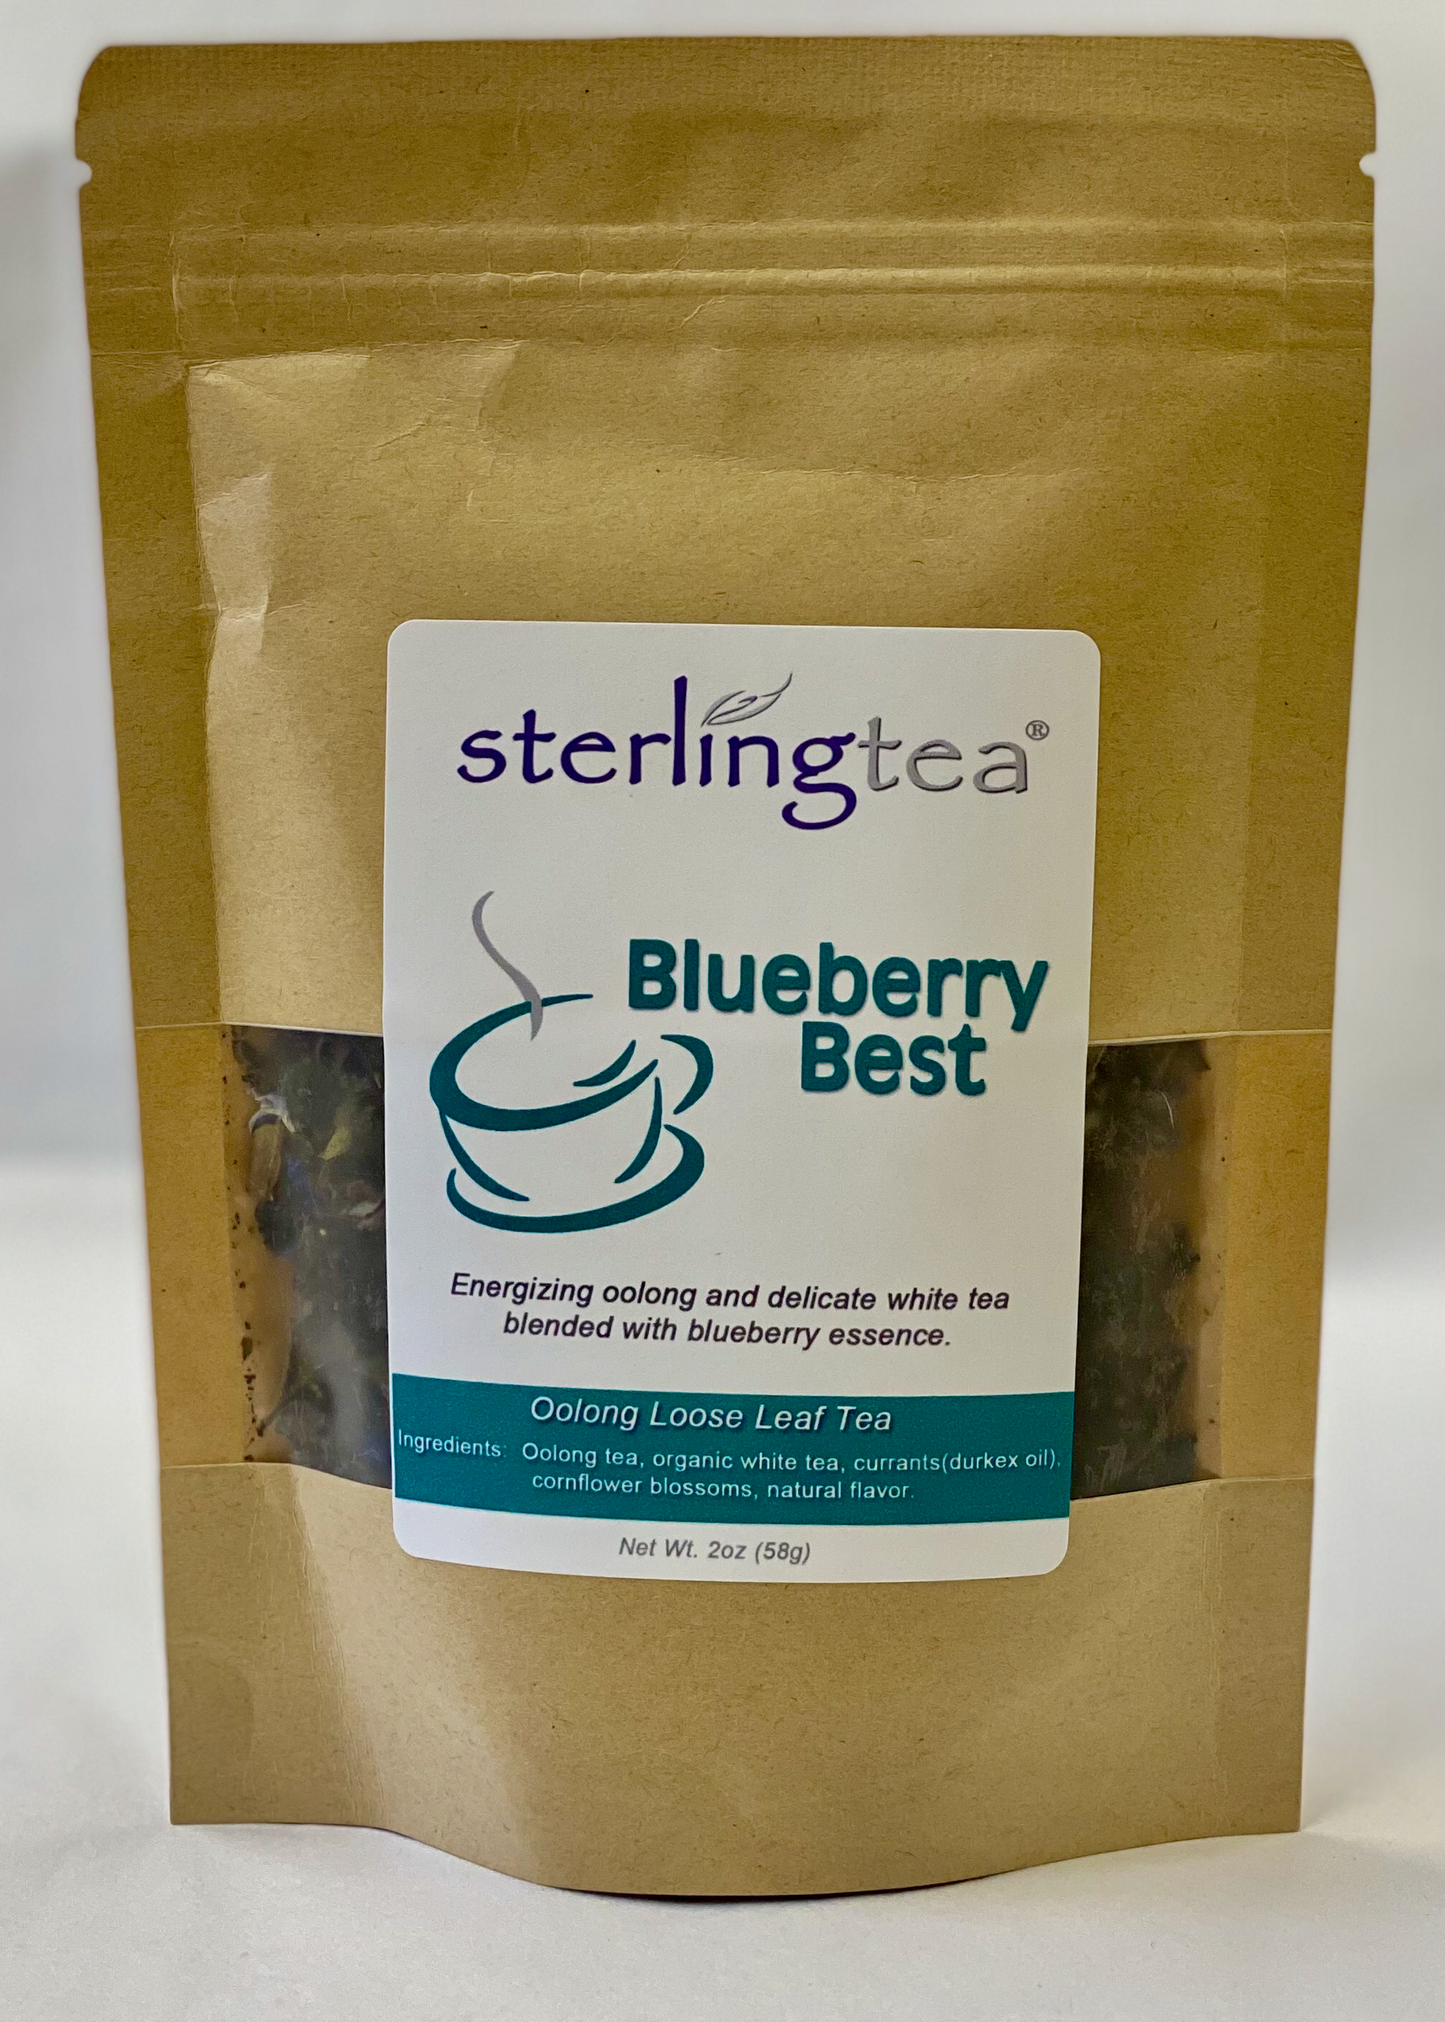 Blueberry Best - Blueberry Loose Leaf Oolong Tea